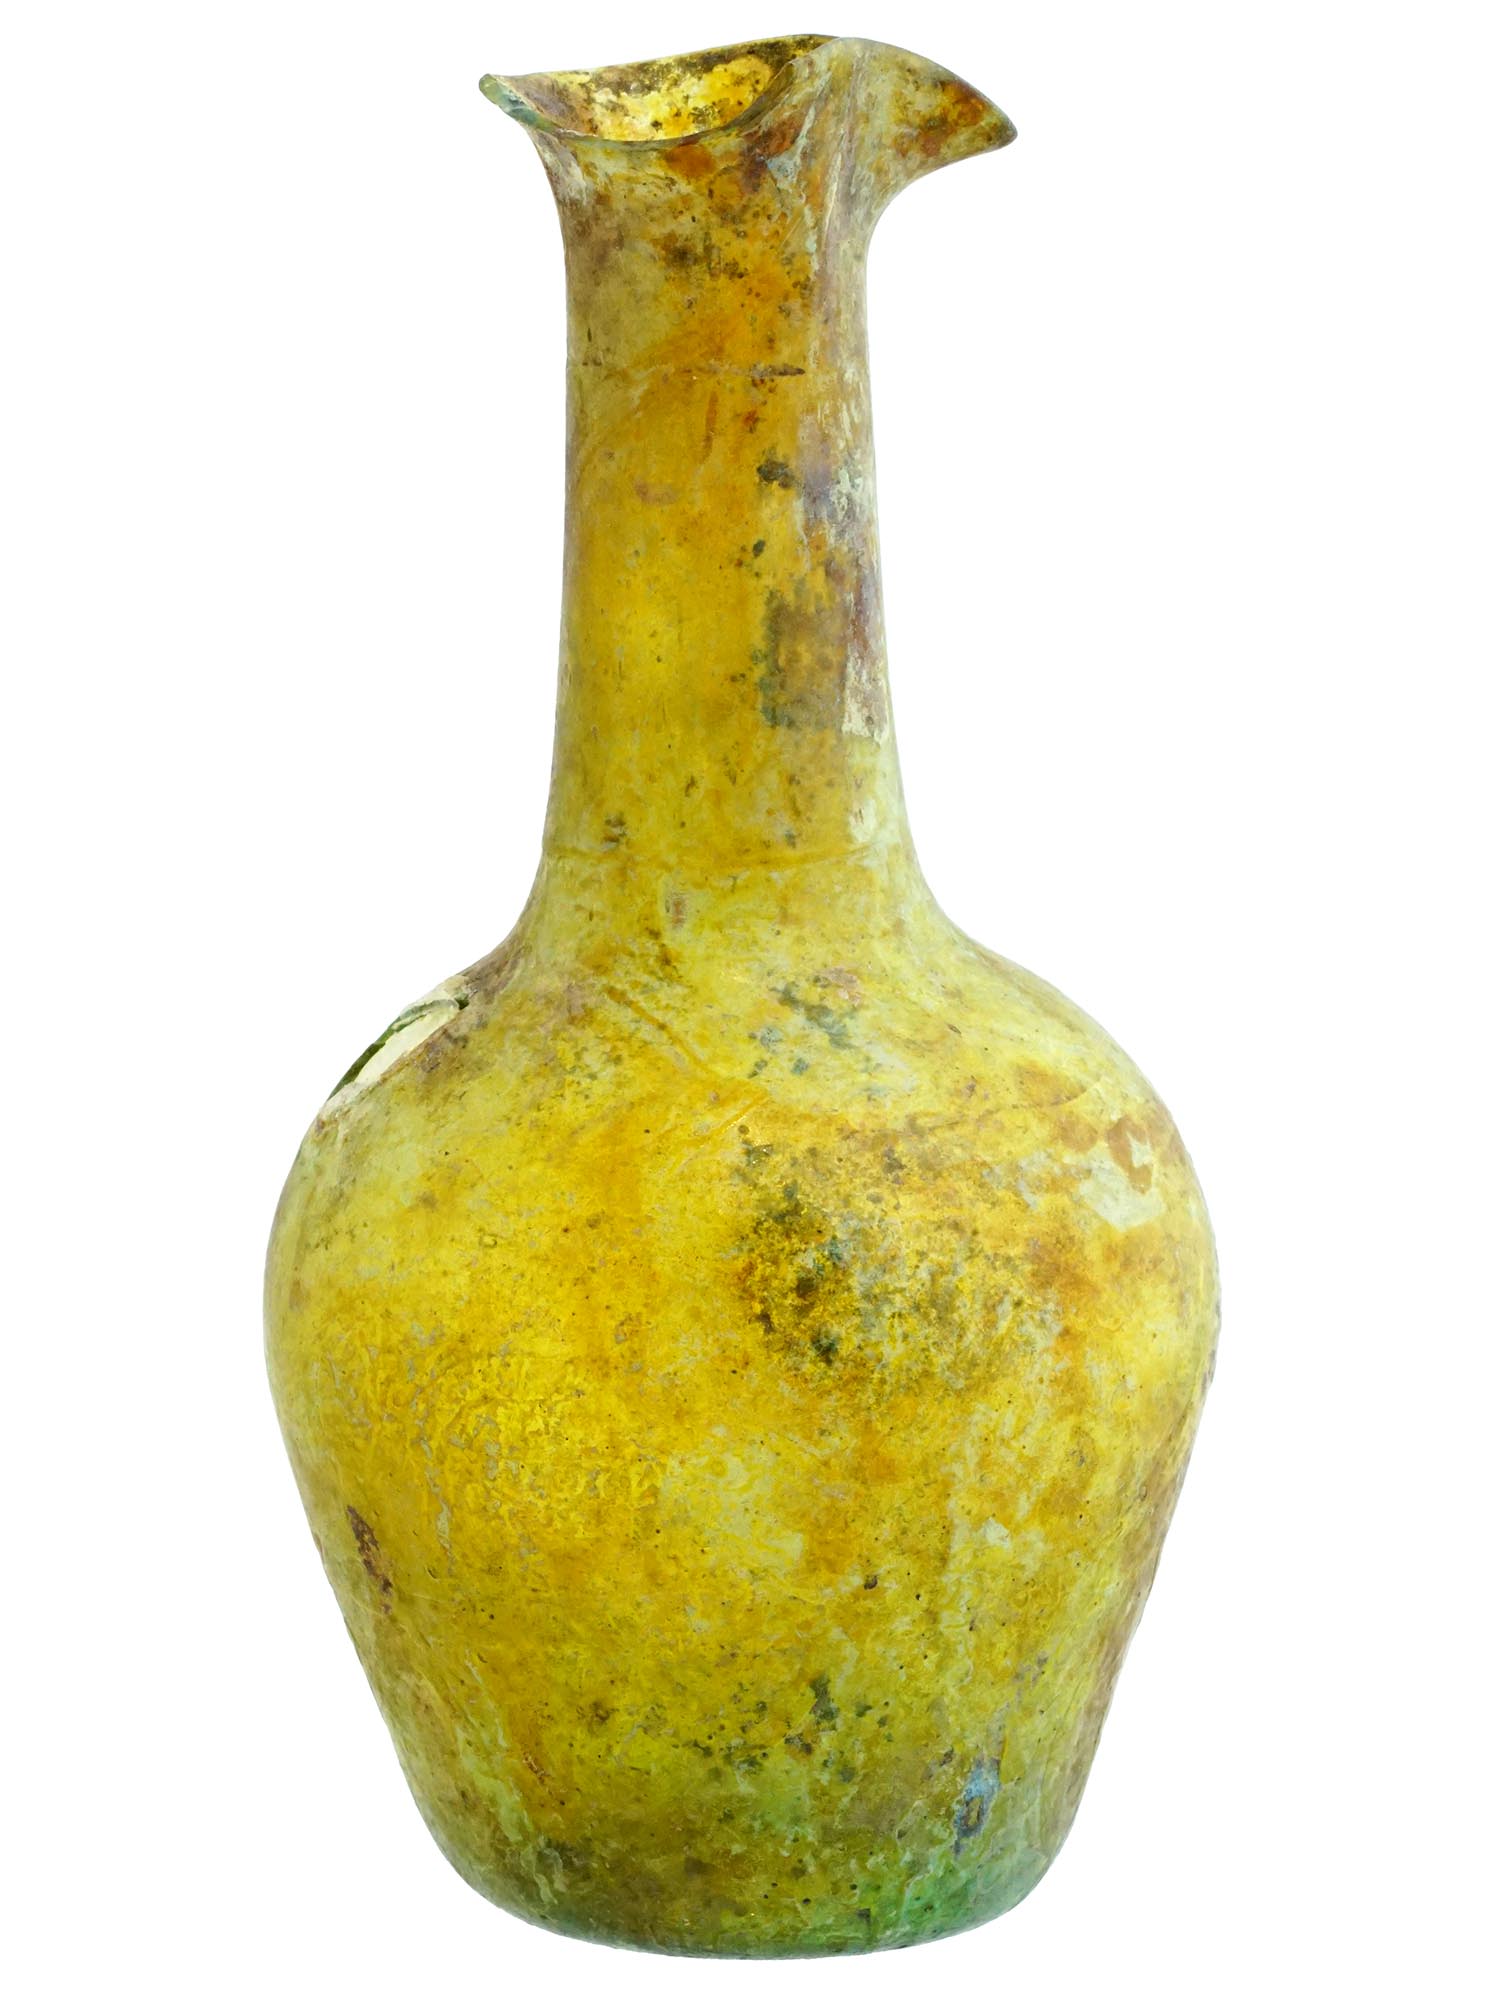 ANCIENT ROMAN GLASS PERFUME BOTTLE 1ST CENTURY BC PIC-2